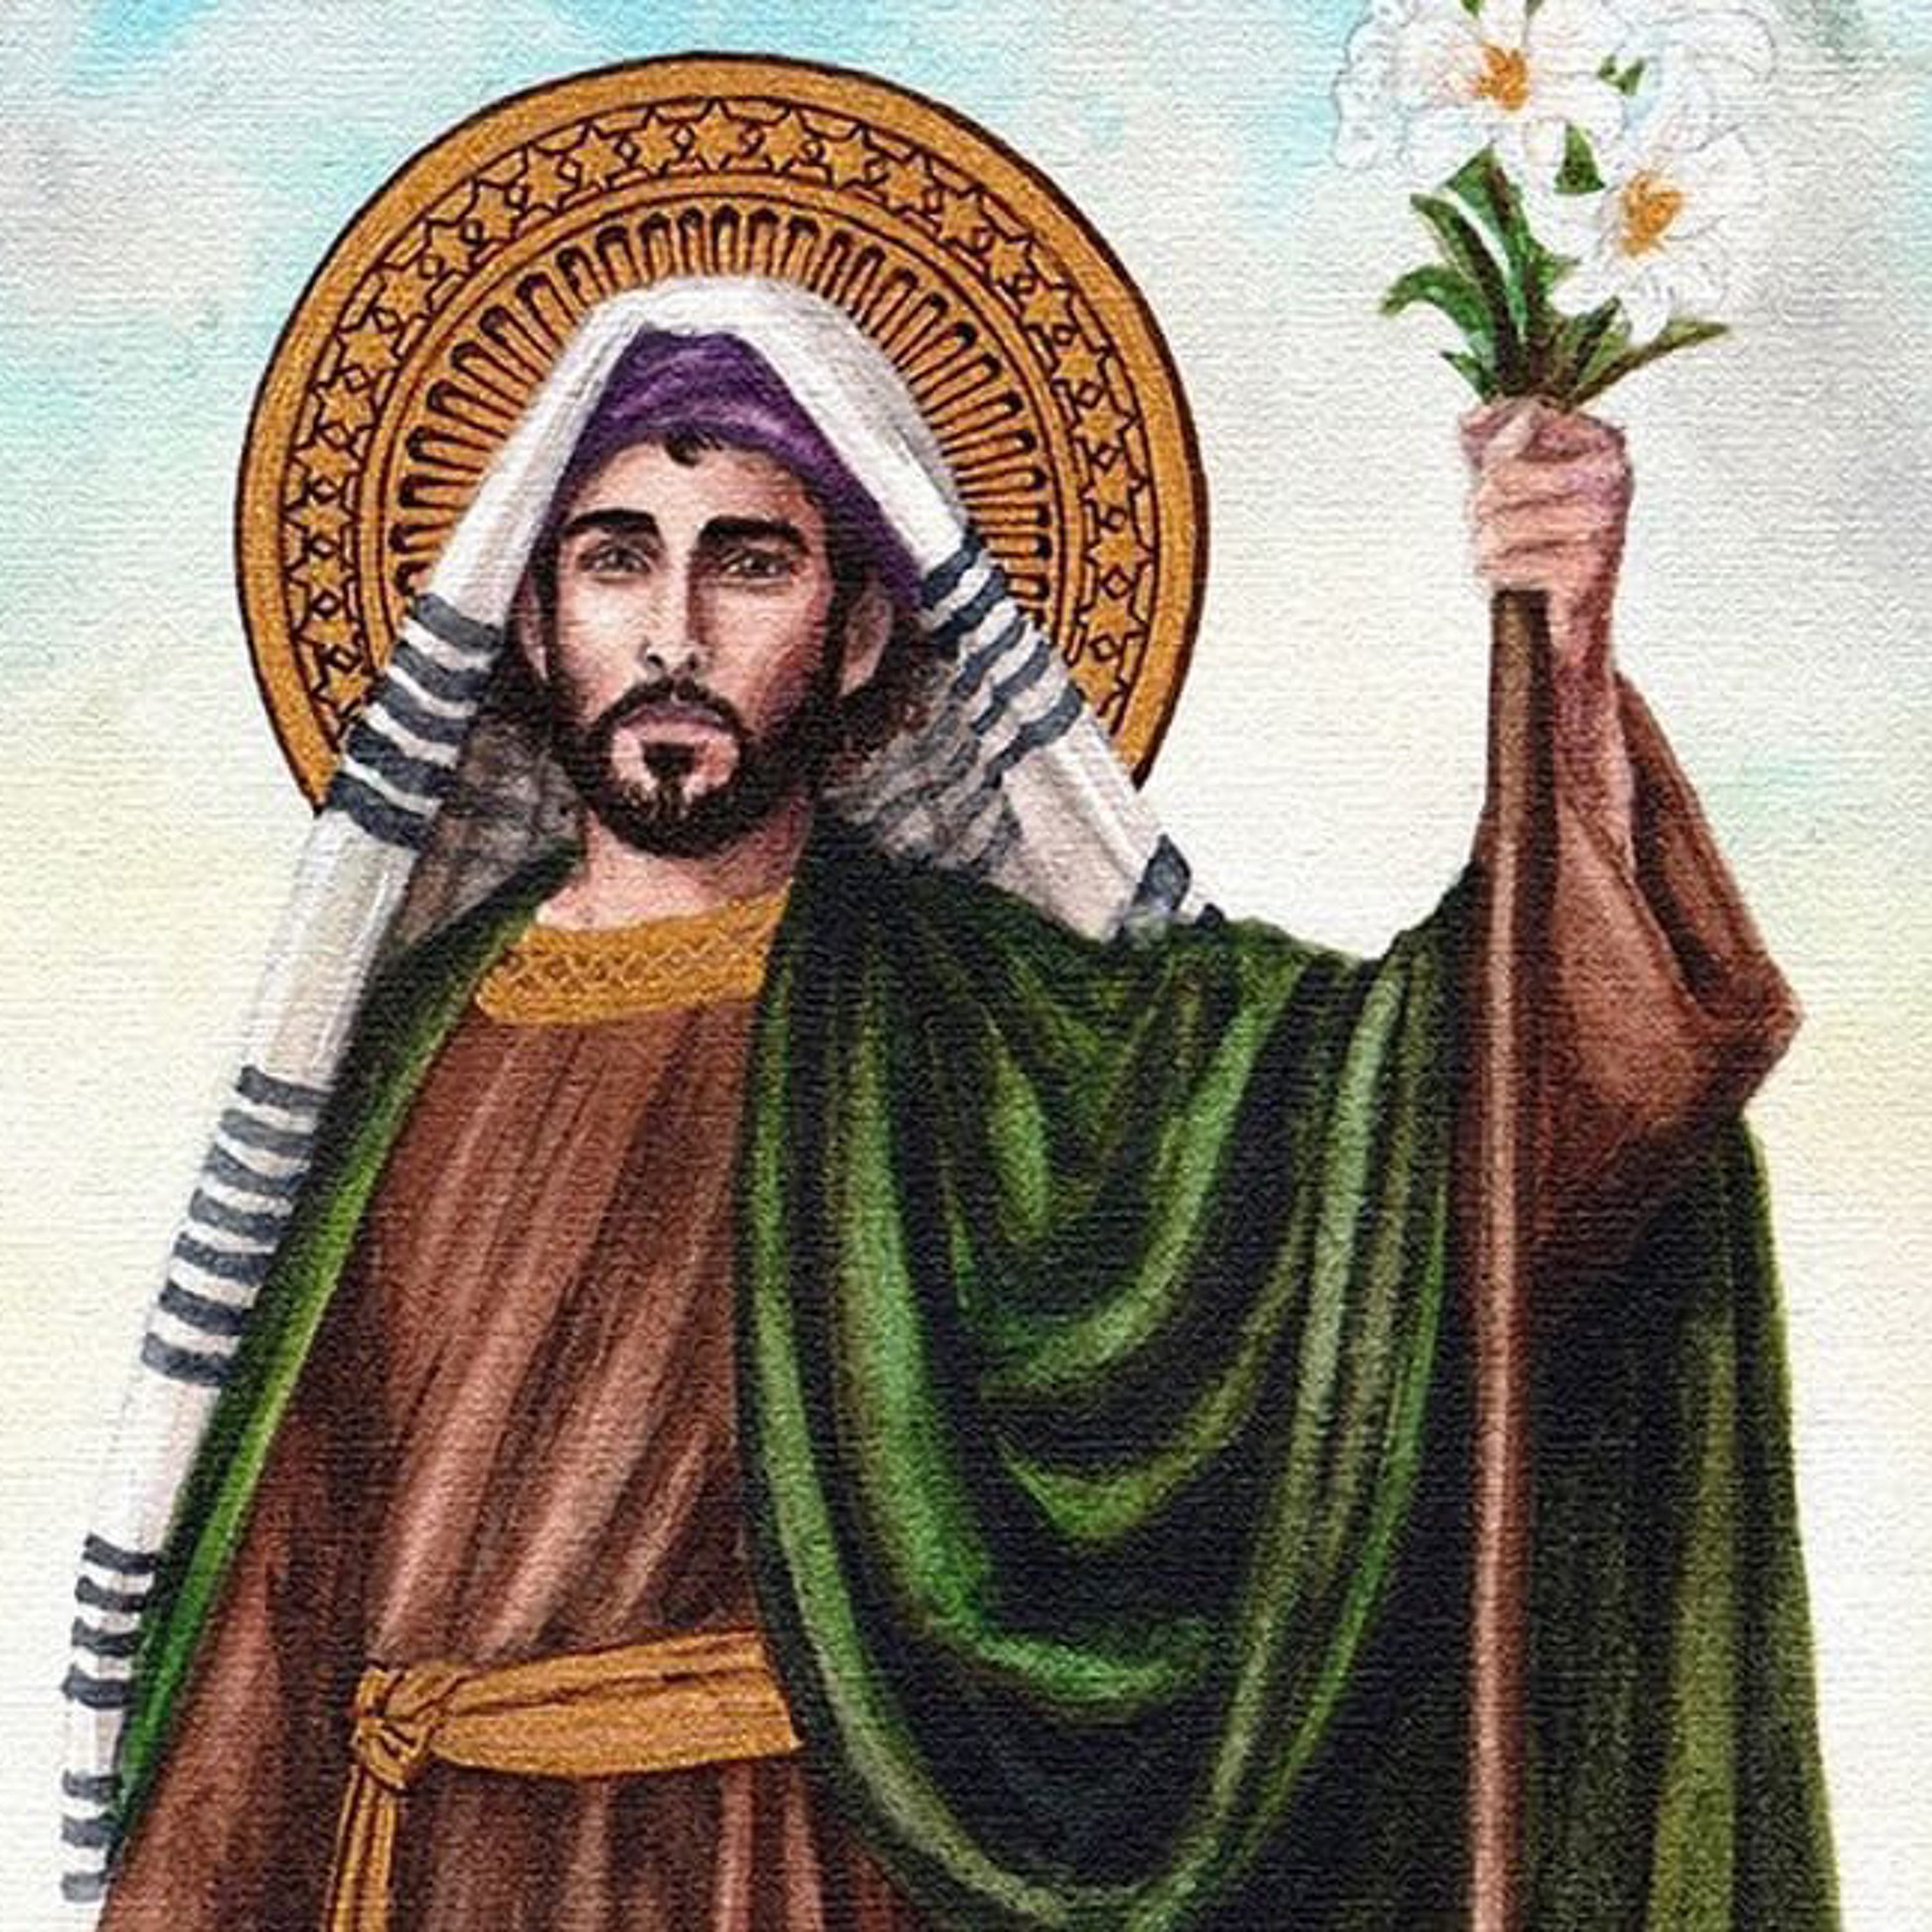 St. Joseph and the Hidden Life at Nazareth (Talk 3 of 3)